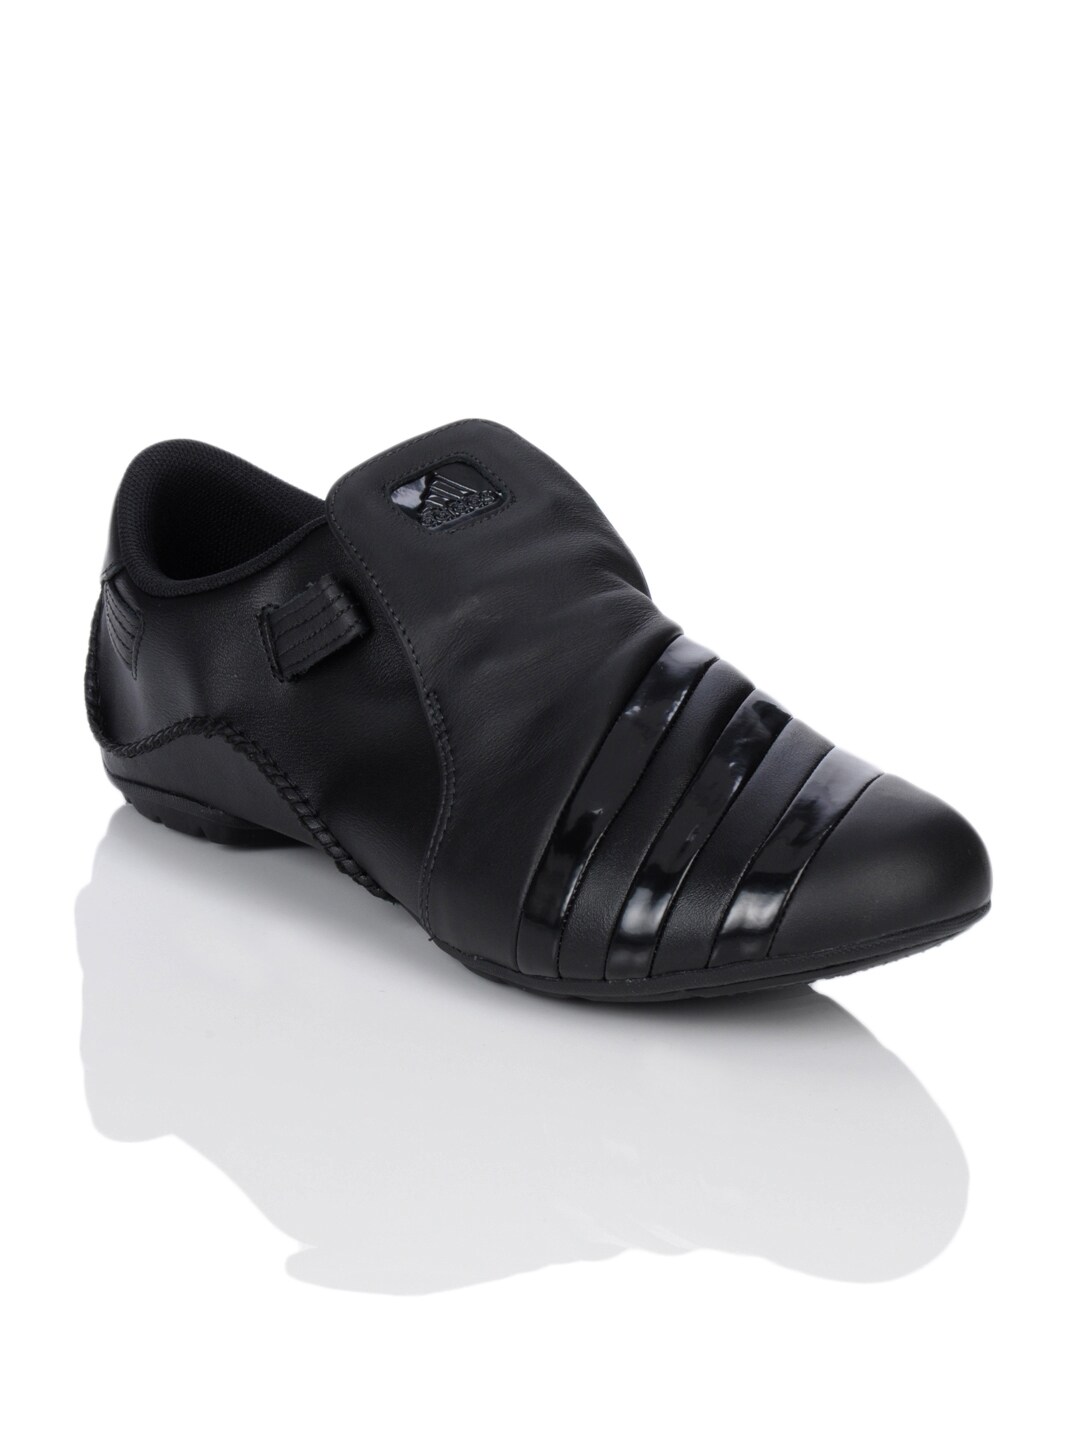 ADIDAS Men Mactelo Black Sports Shoes